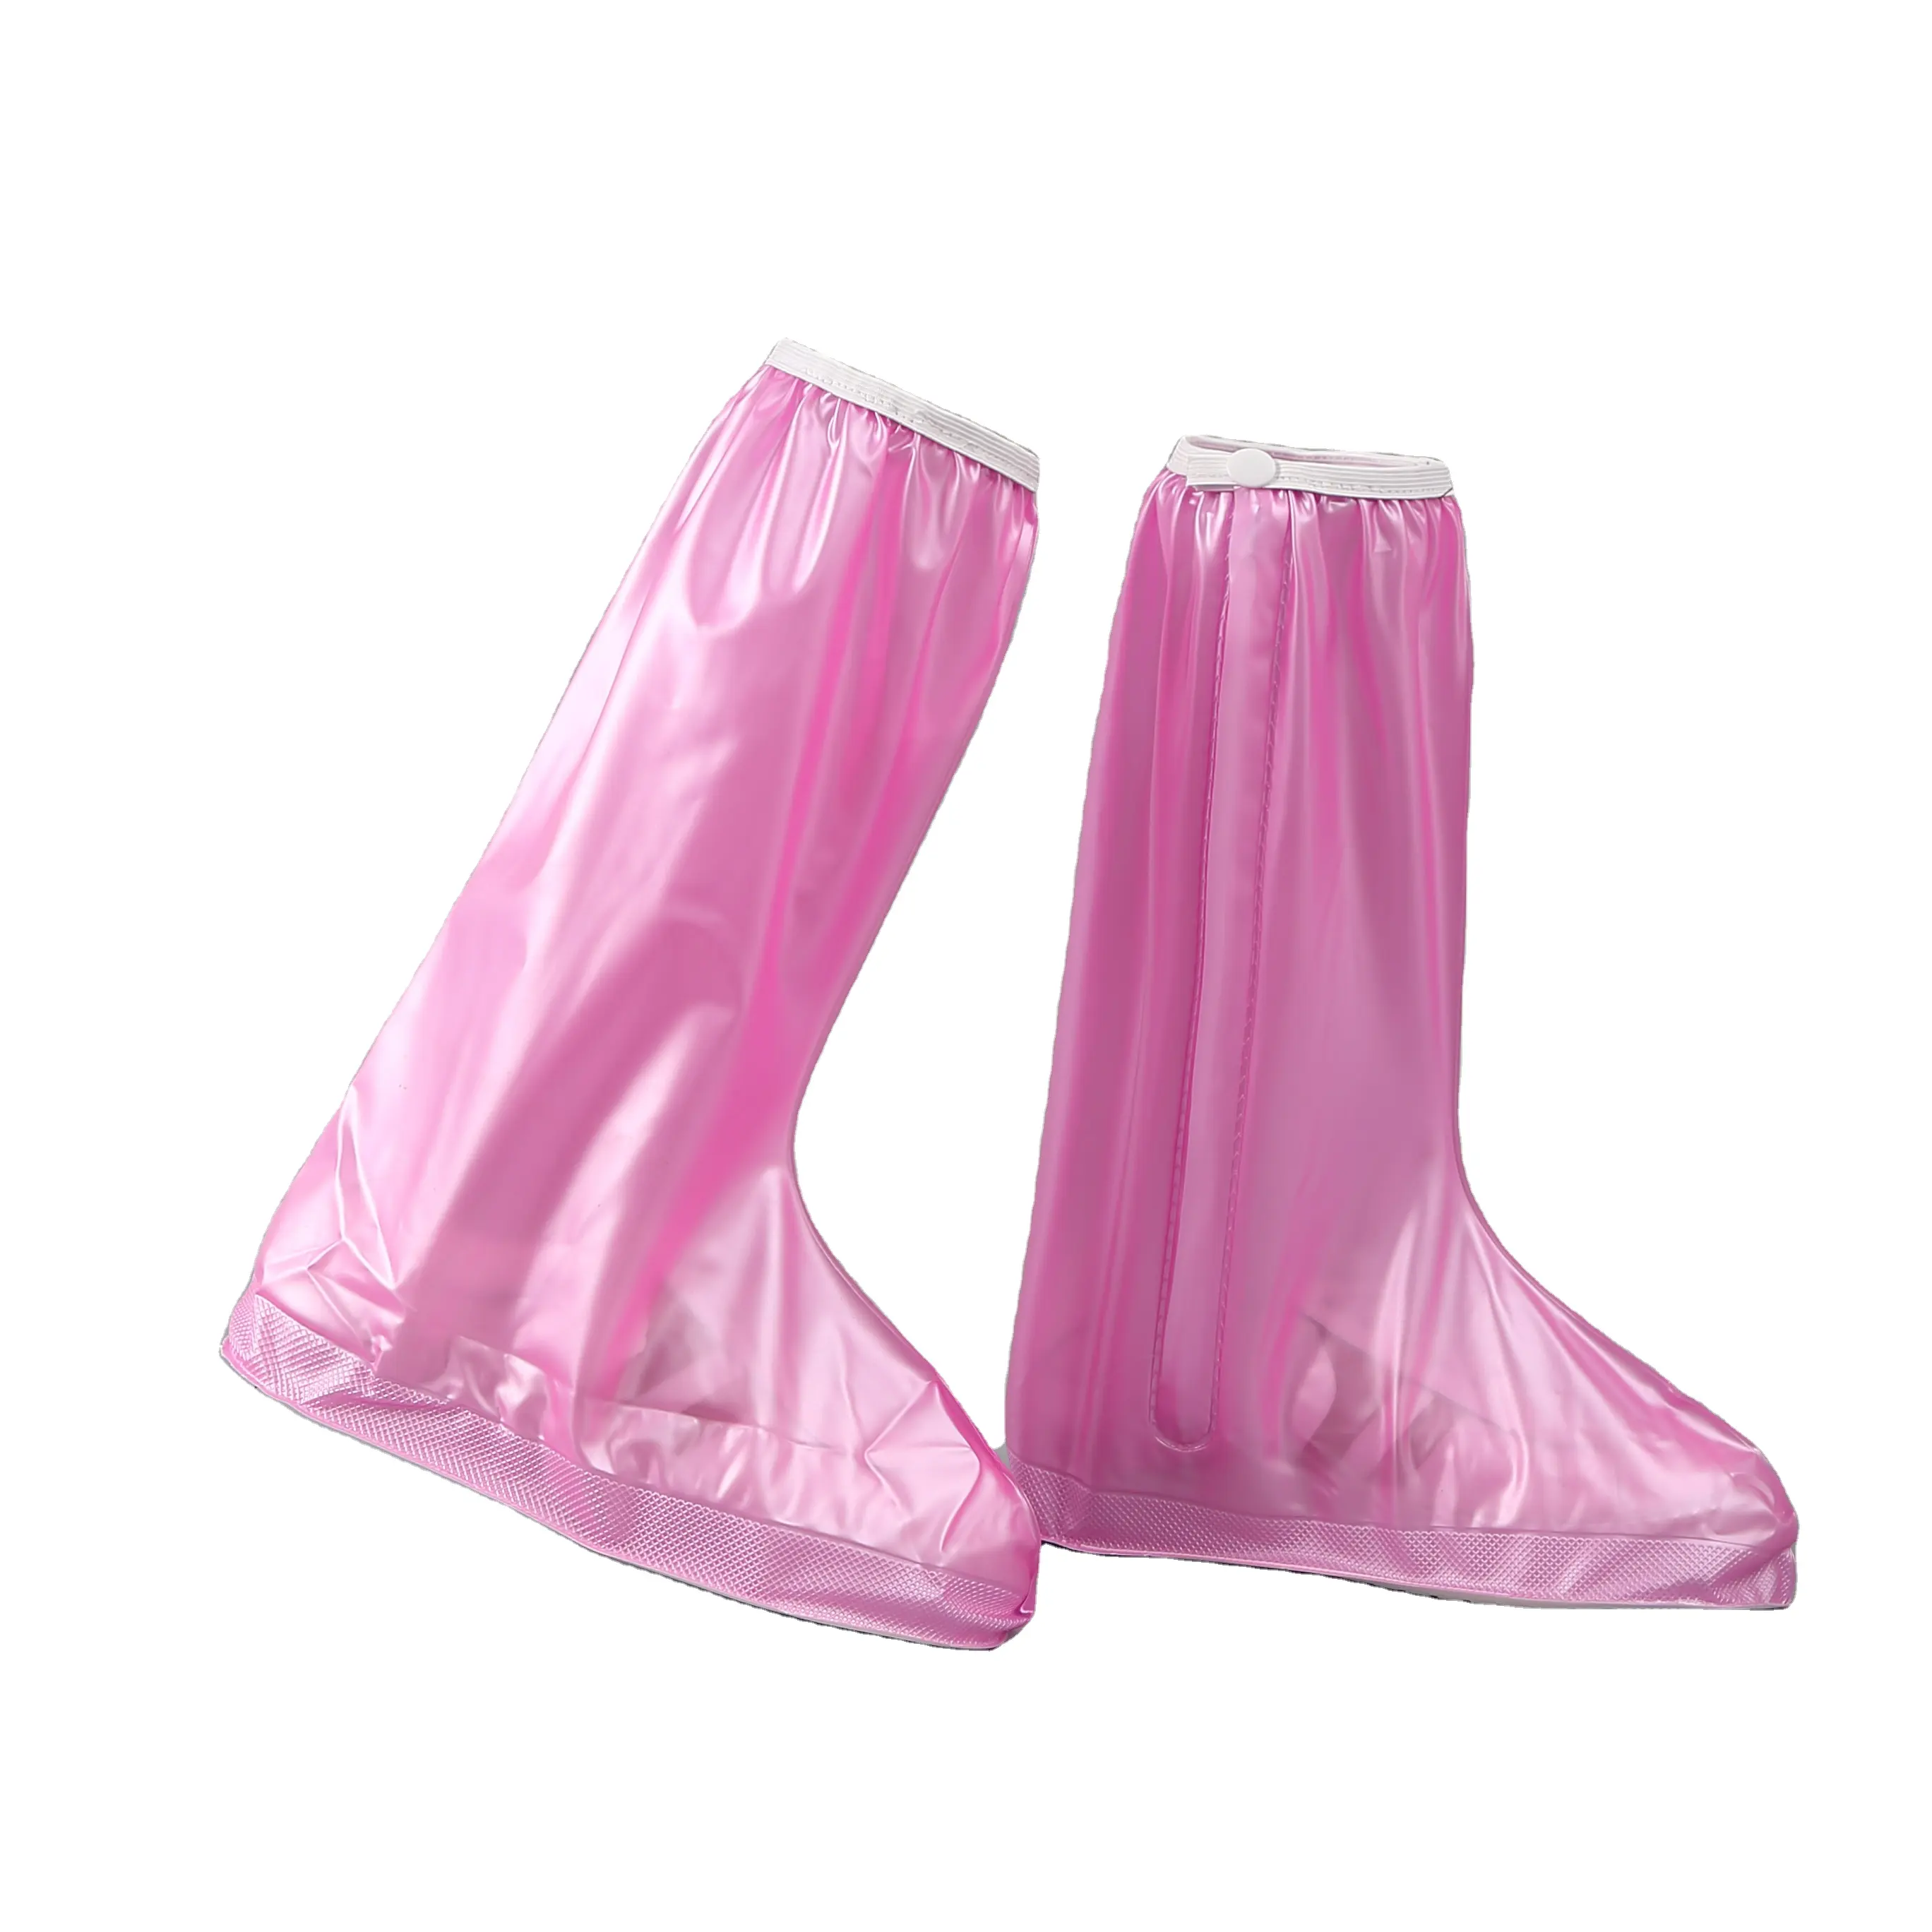 Бахилы на обувь ПВХ от воды и грязи LVR 819A M 37-38 26.5 см (Pink) (16180)